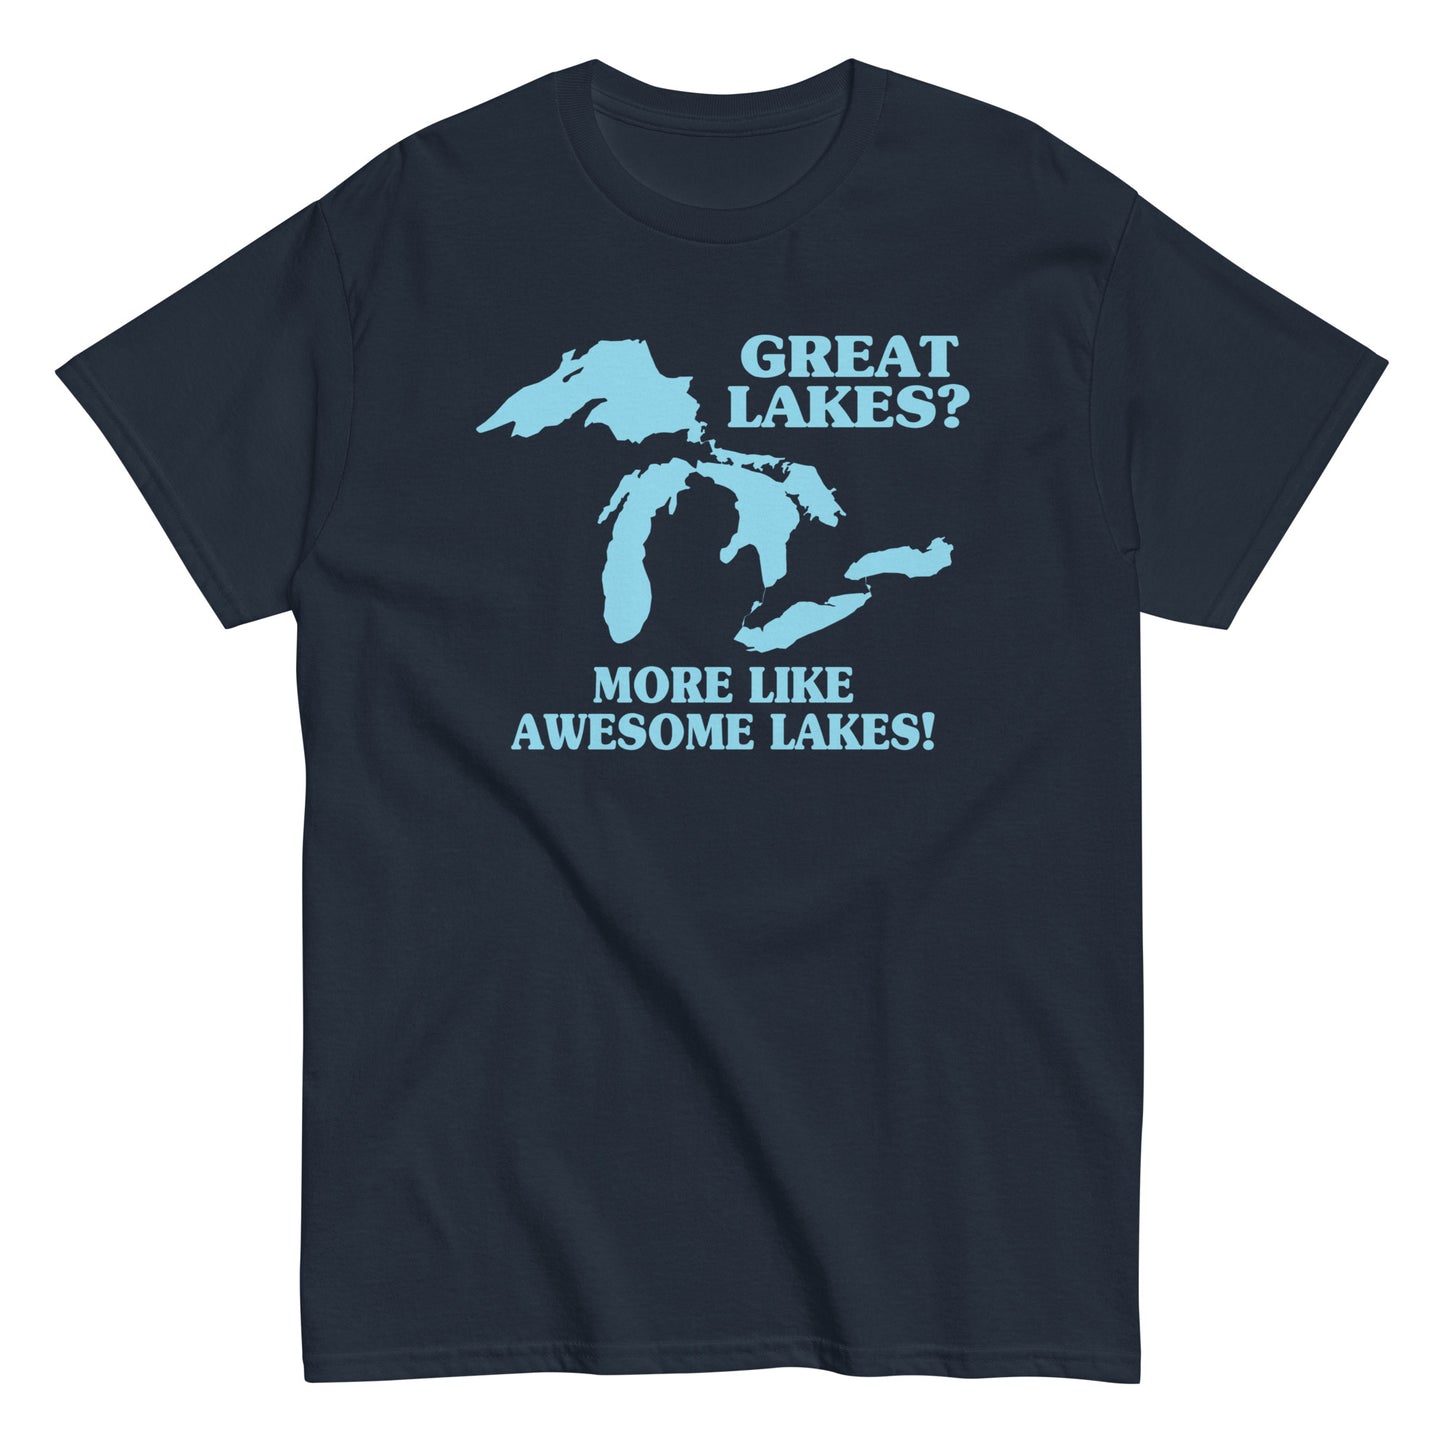 Great Lakes? Men's Classic Tee